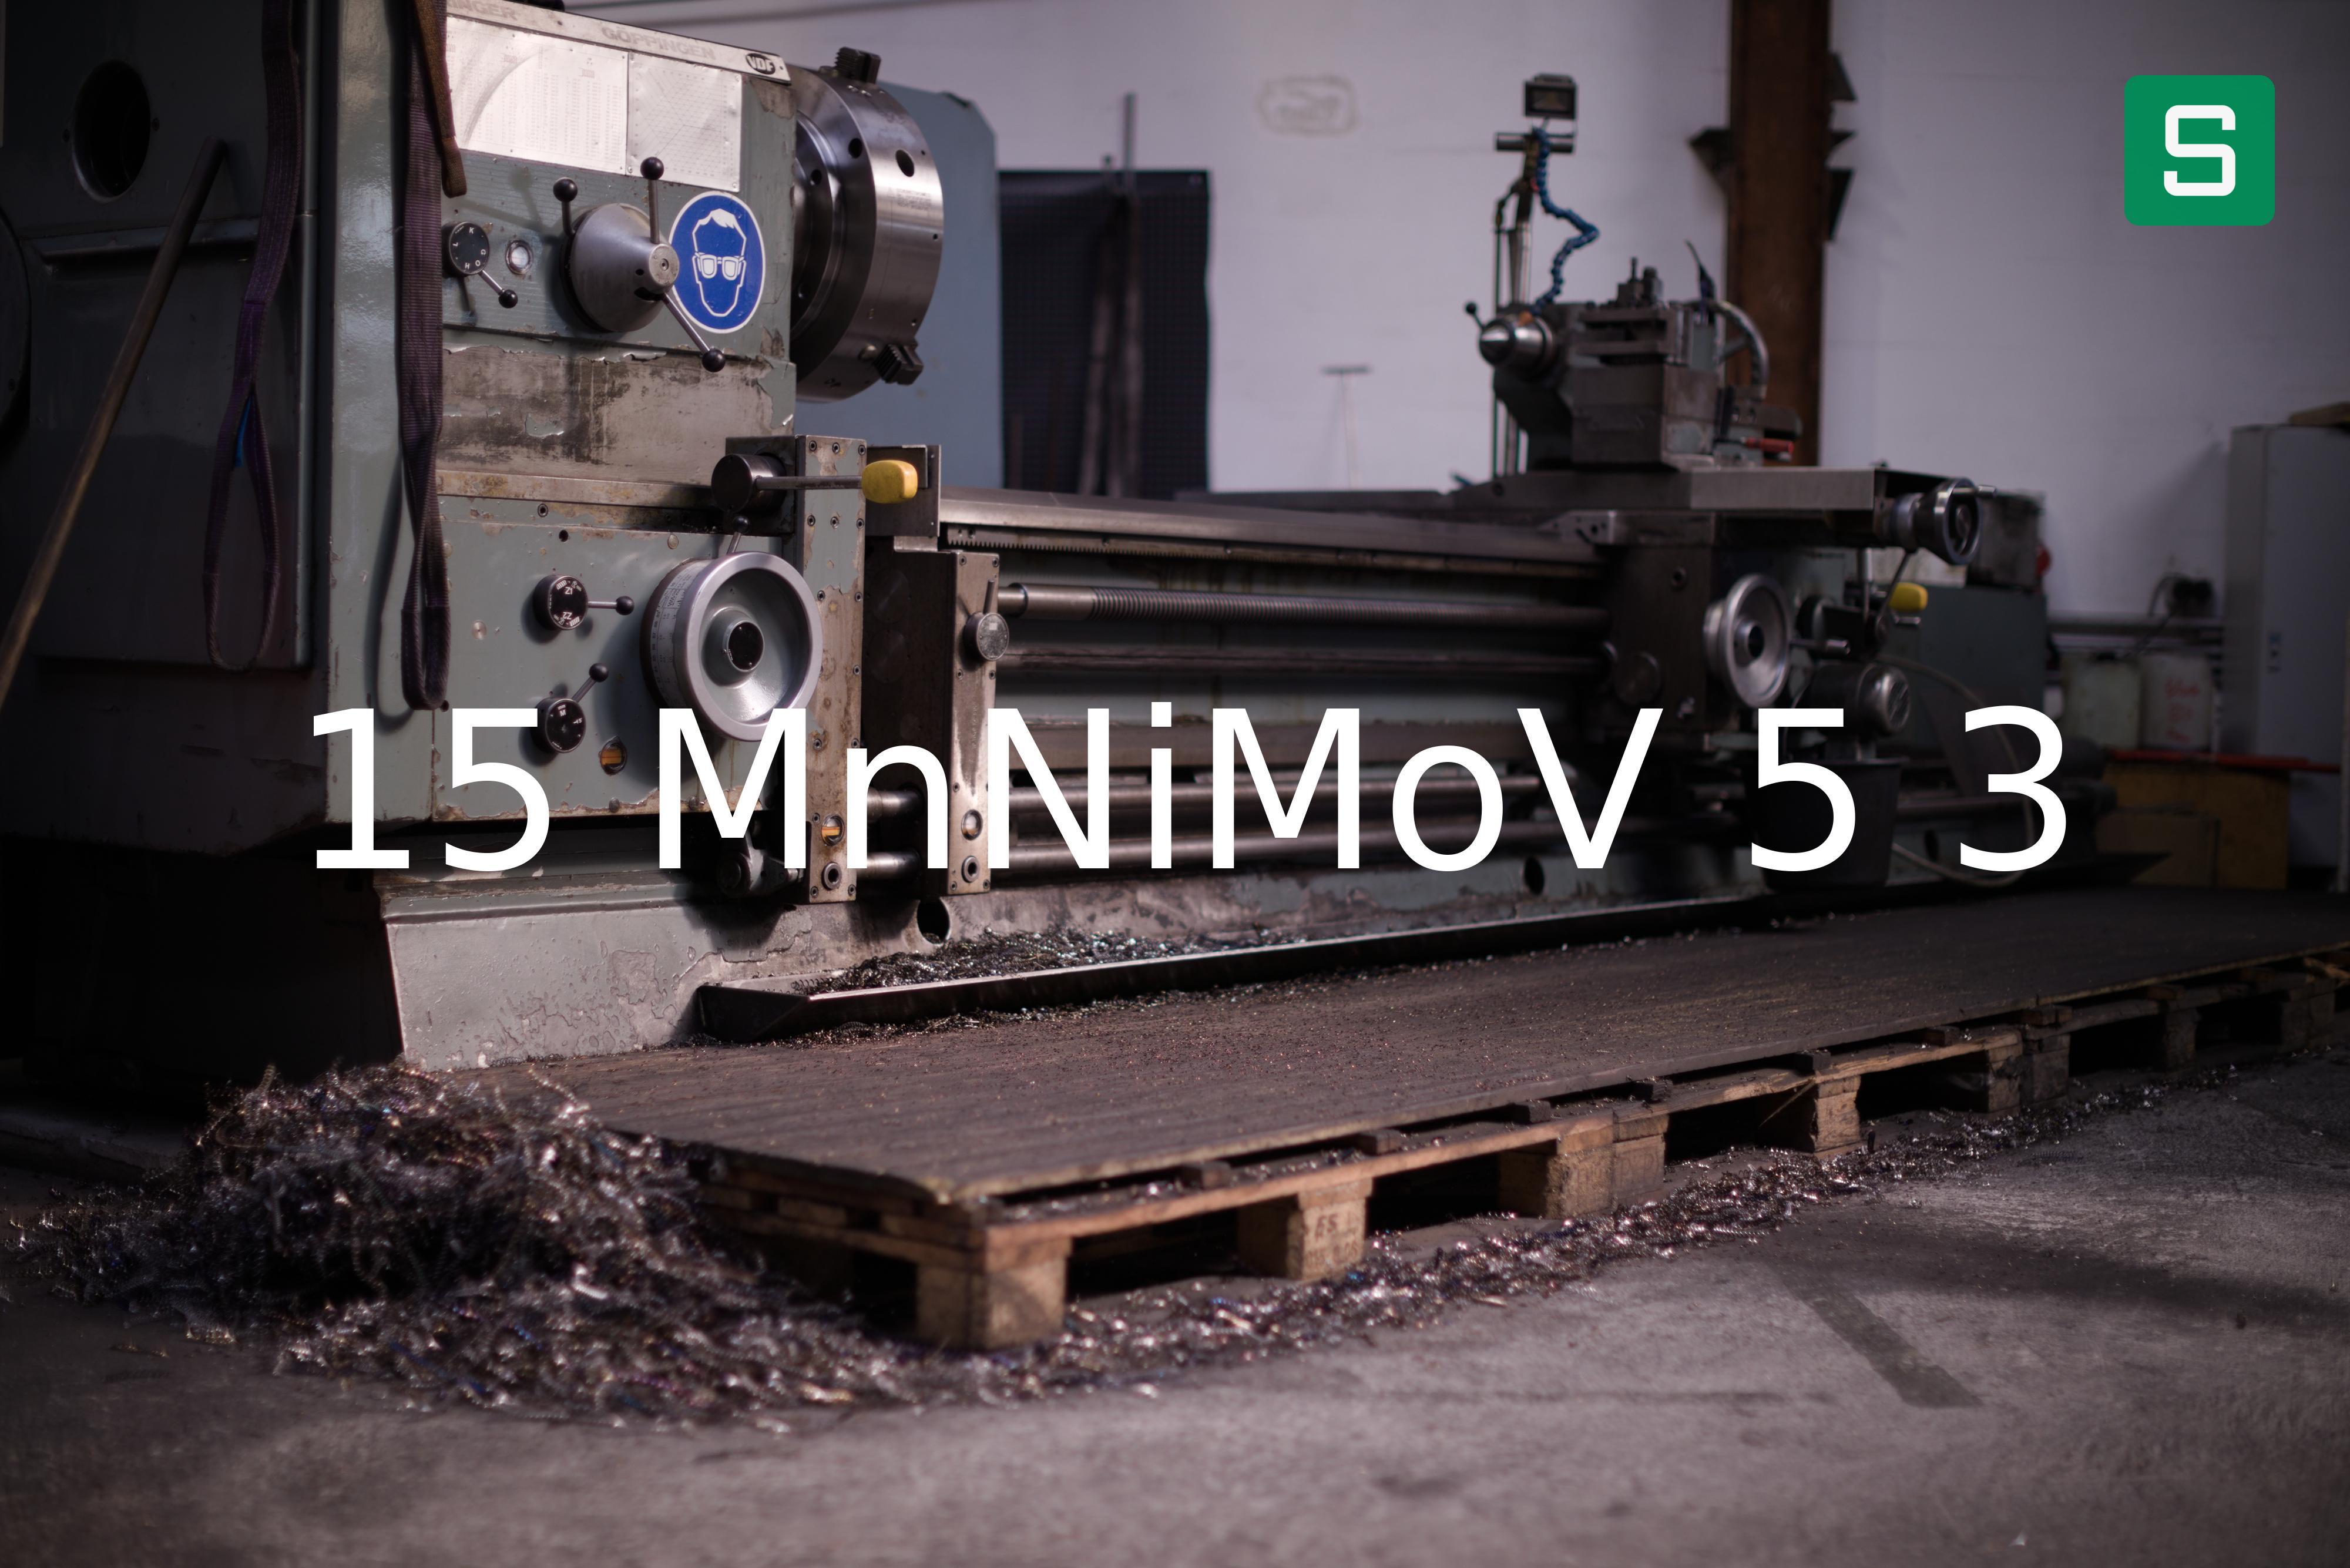 Steel Material: 15 MnNiMoV 5 3